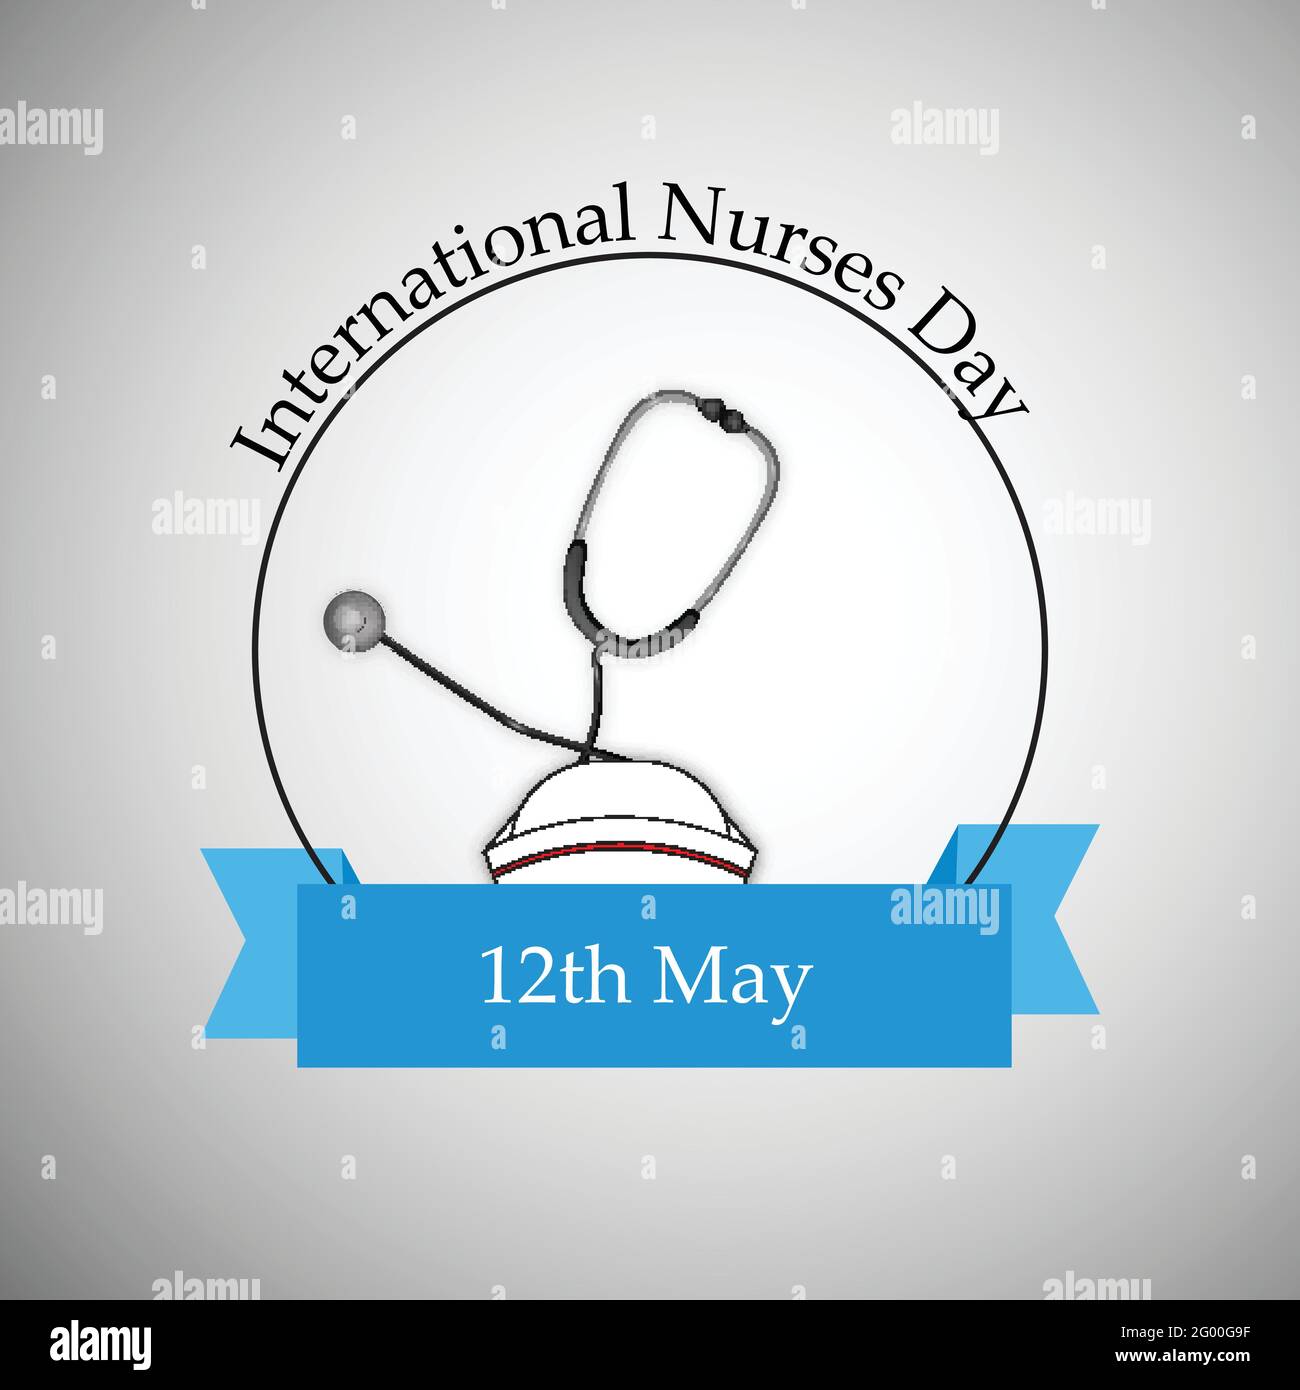 International nurses day background Stock Vector